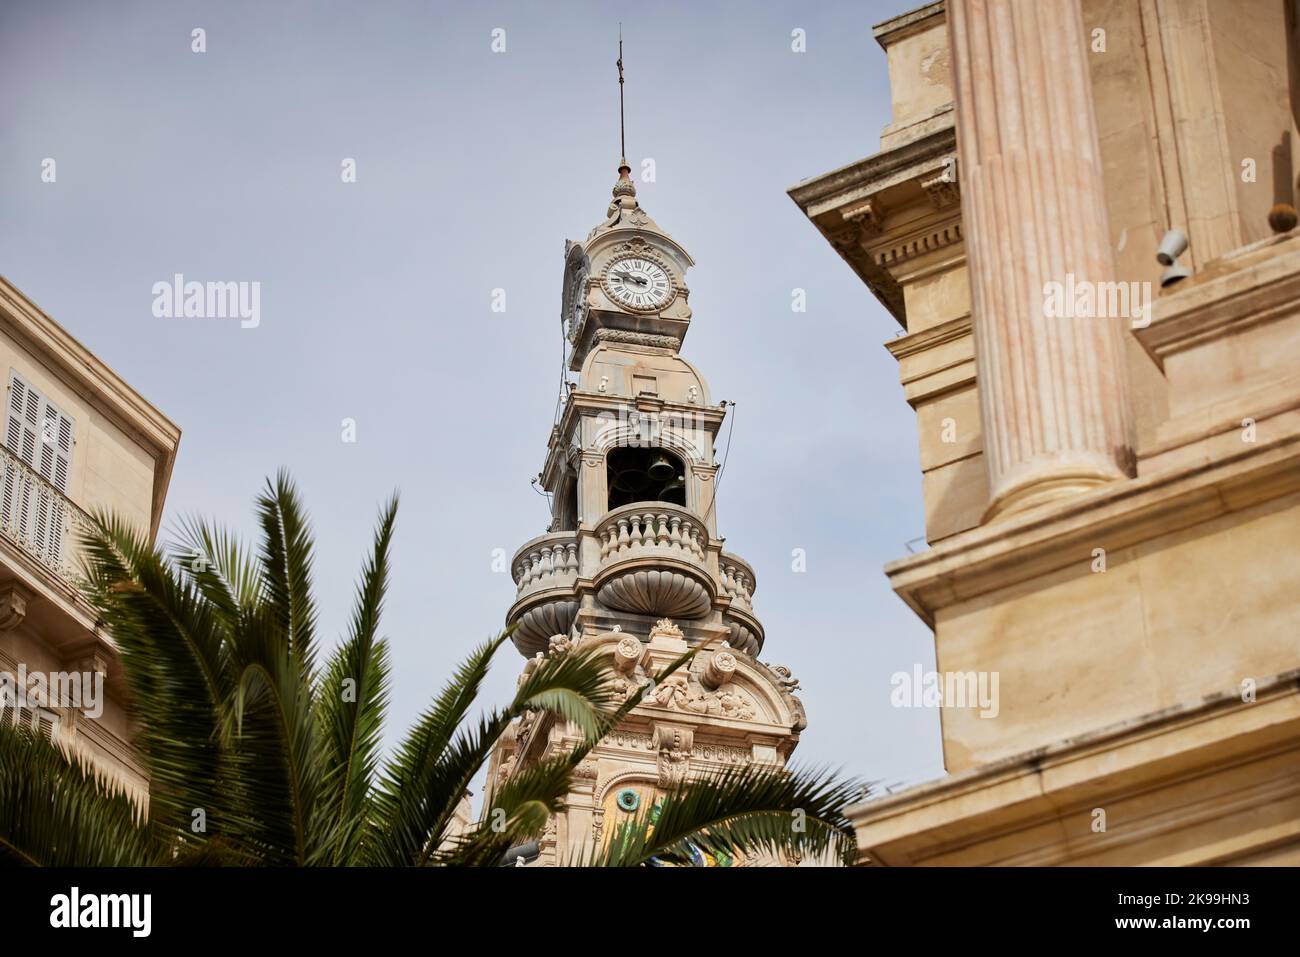 Toulon port city on southern France Mediterranean coast, ornate clocktower Stock Photo